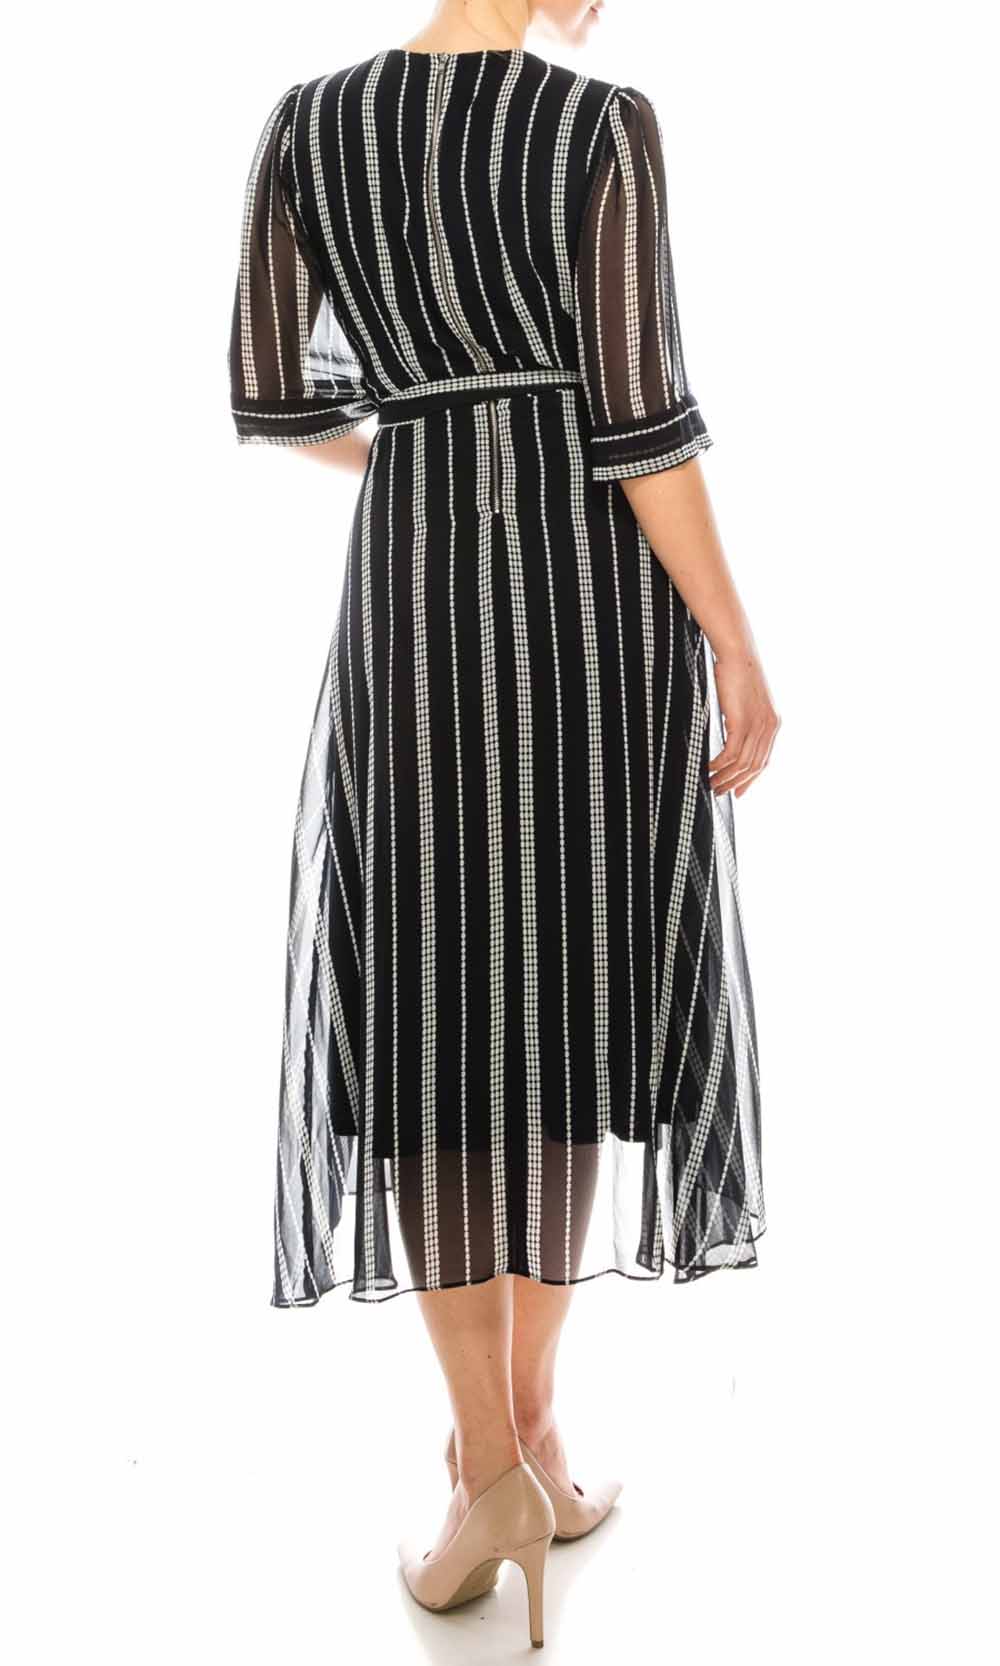 Gabby Skye - 95216MG Faux Wrap Style Stripe Chiffon Dress In Print